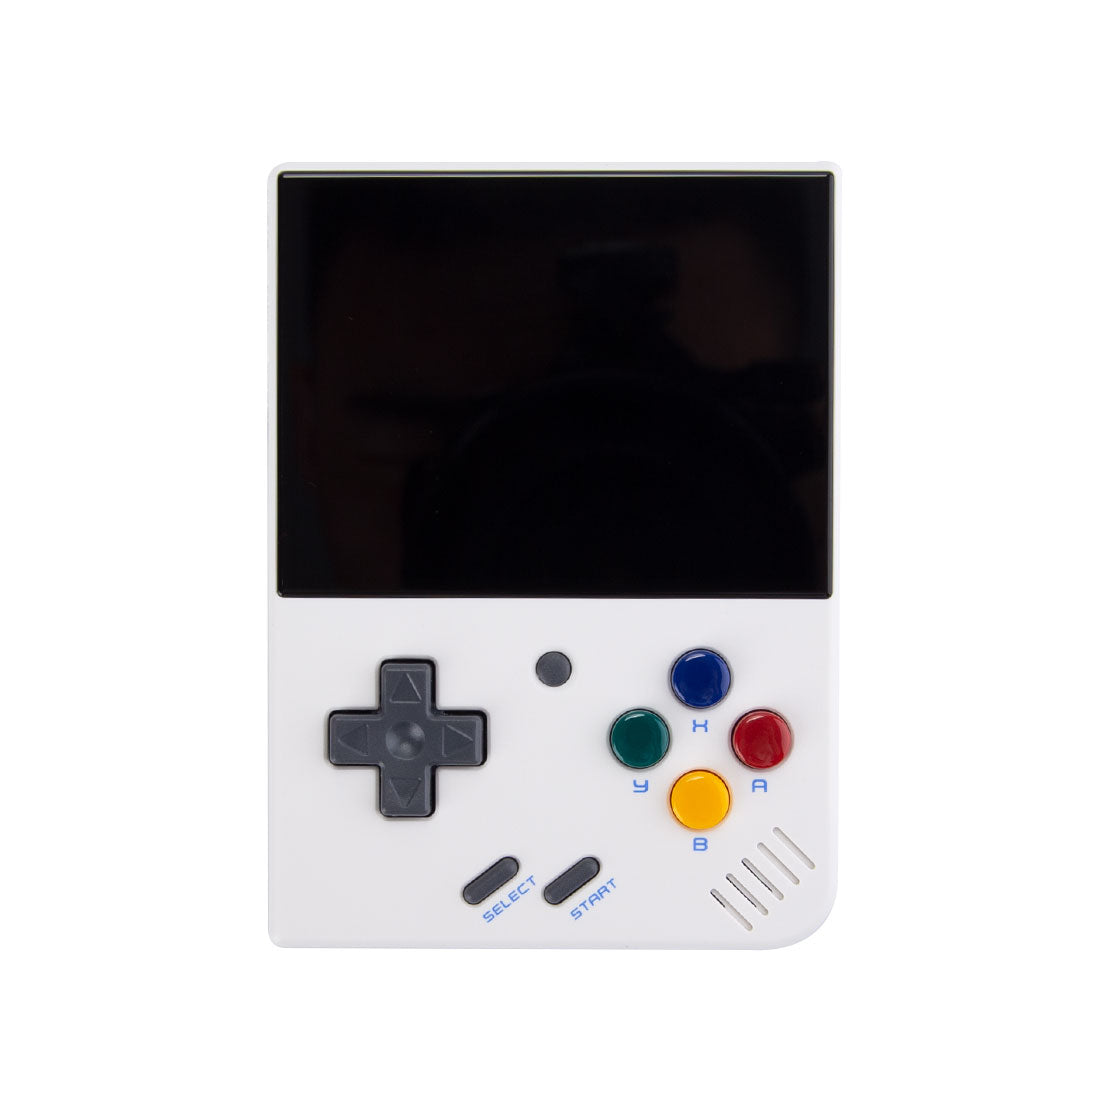 Miyoo Mini Plus Retro Game Console Set - Mechdiy